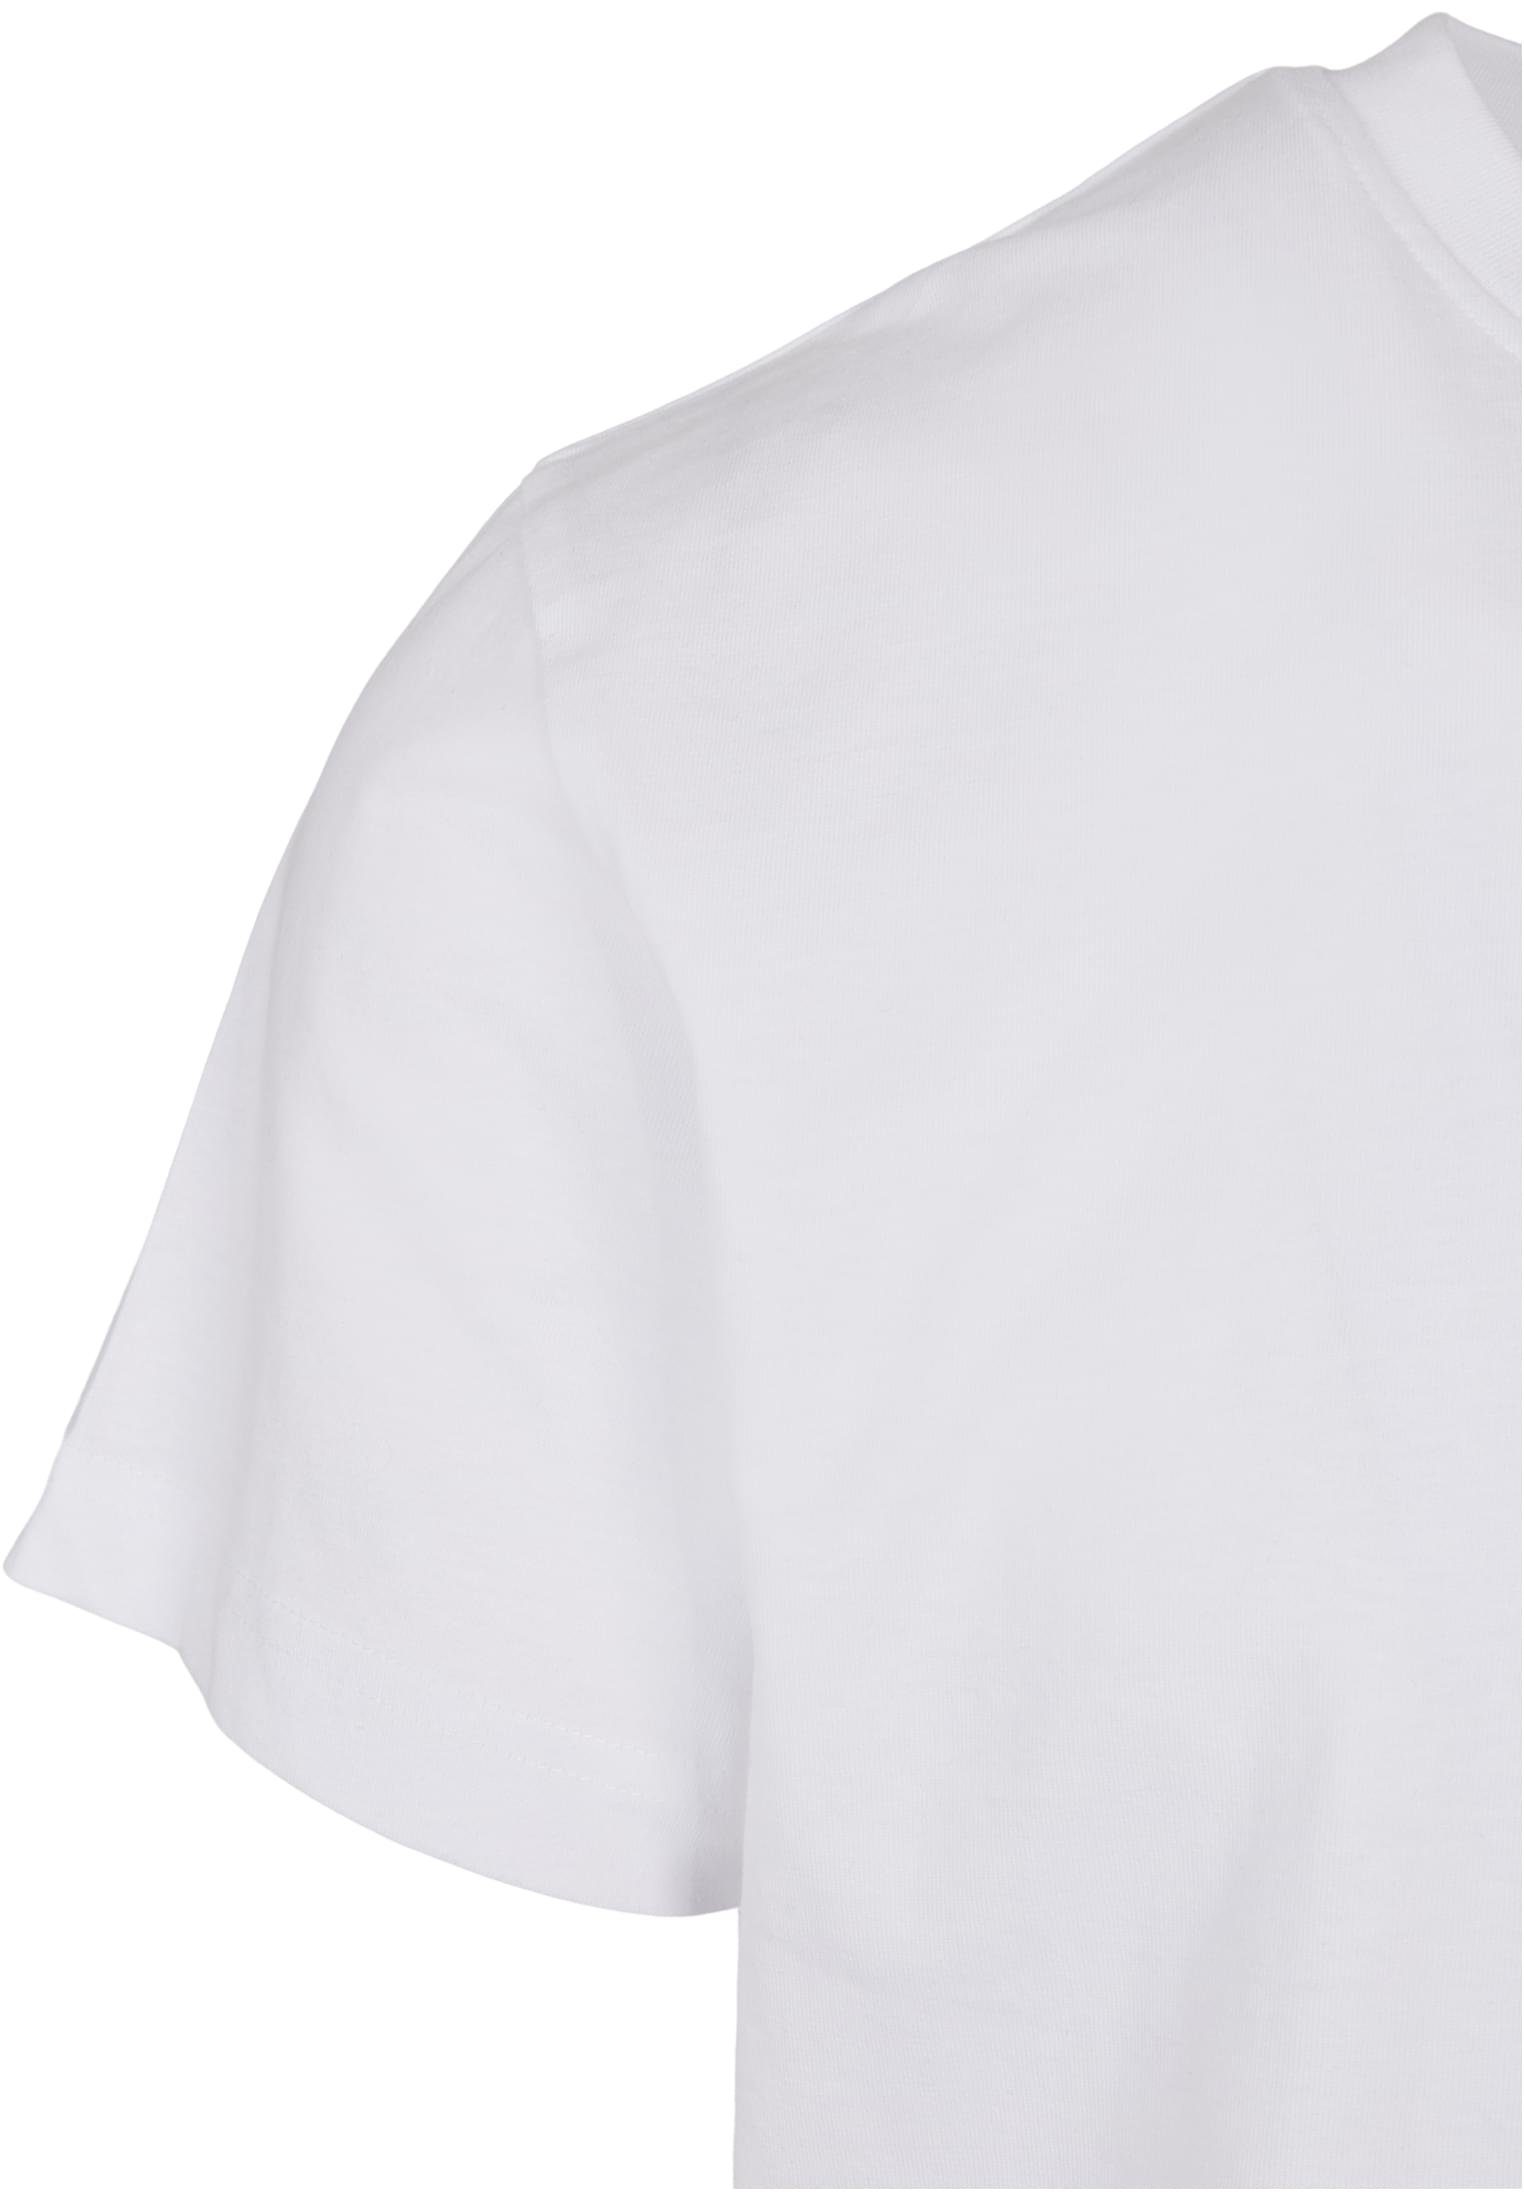 (1-tlg) Herren CLASSICS Tee Kurzarmshirt Basic Recycled URBAN white